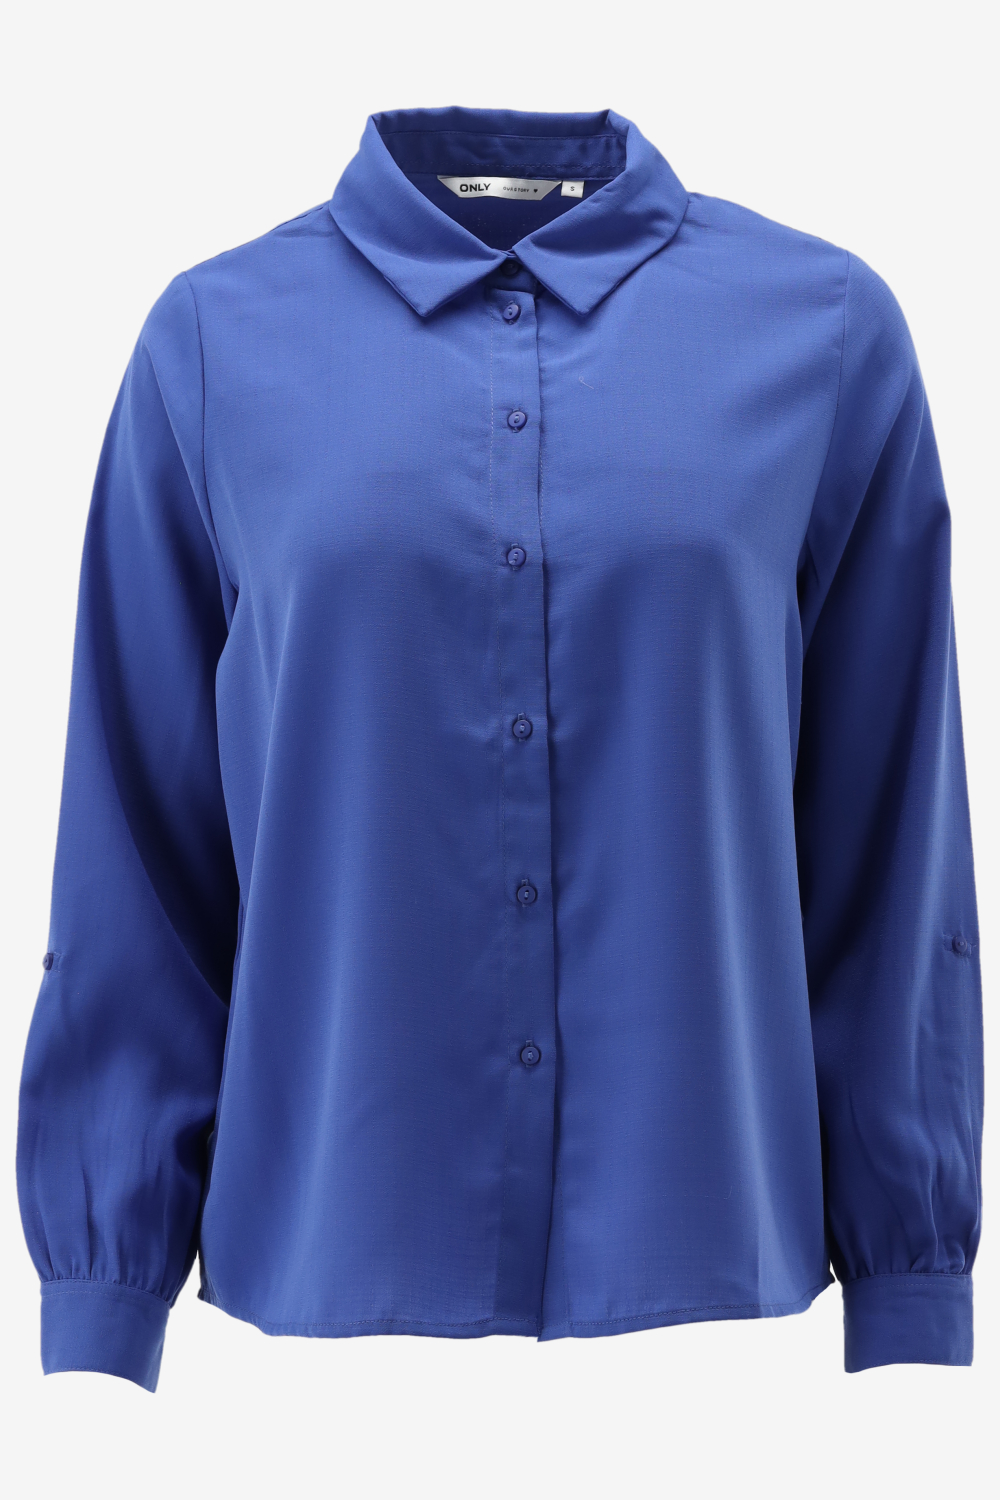 Only Onlmulan L/s Fold Up Shirt Dazzling Blue BLAUW L